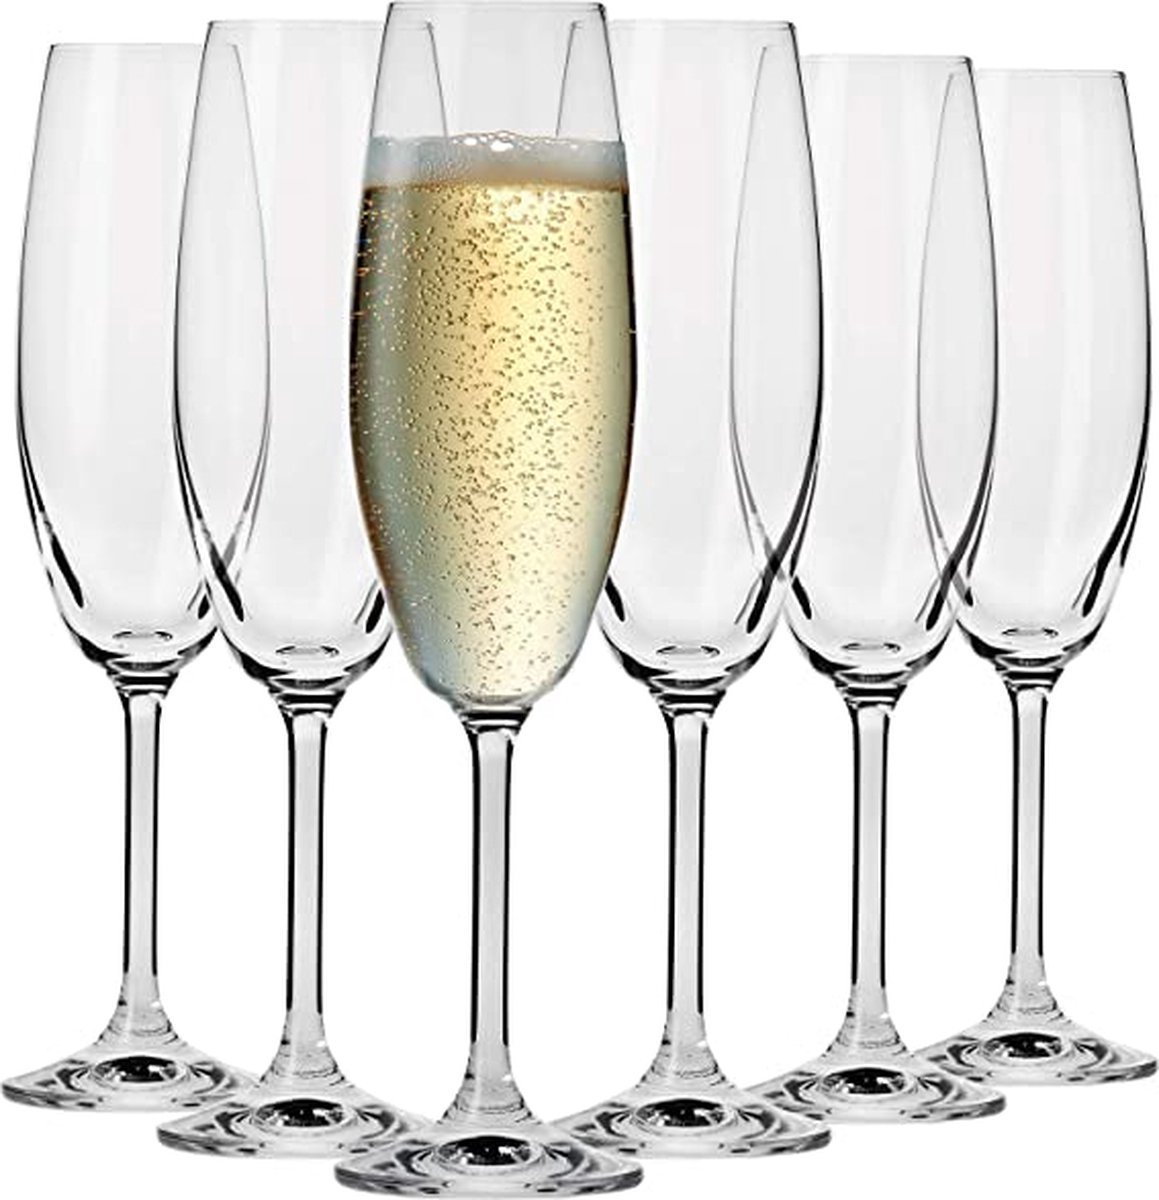 Glasmark Krosno Lot de 6 verres à vin, verres à vin blanc, verres